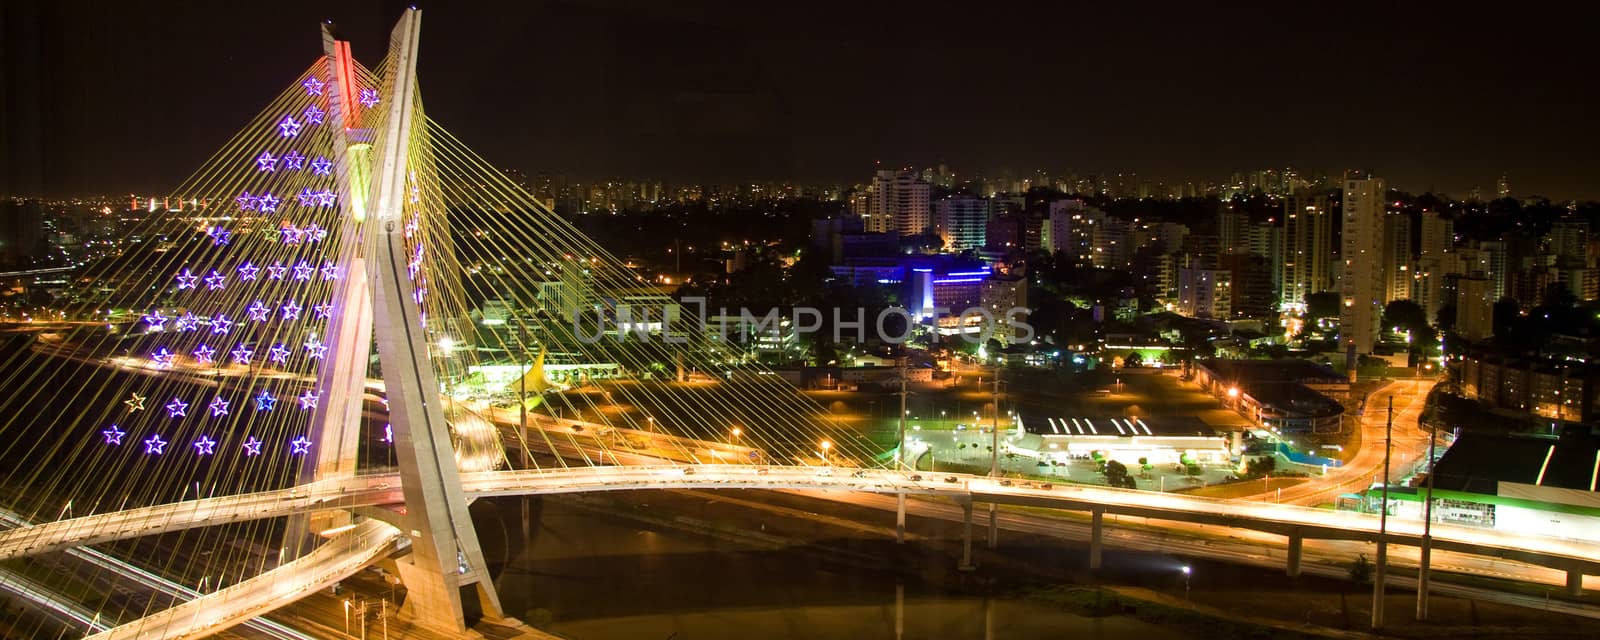 The Oct��vio Frias de Oliveira Bridge over the Pinheiros river in S��o Paulo, Brazil.